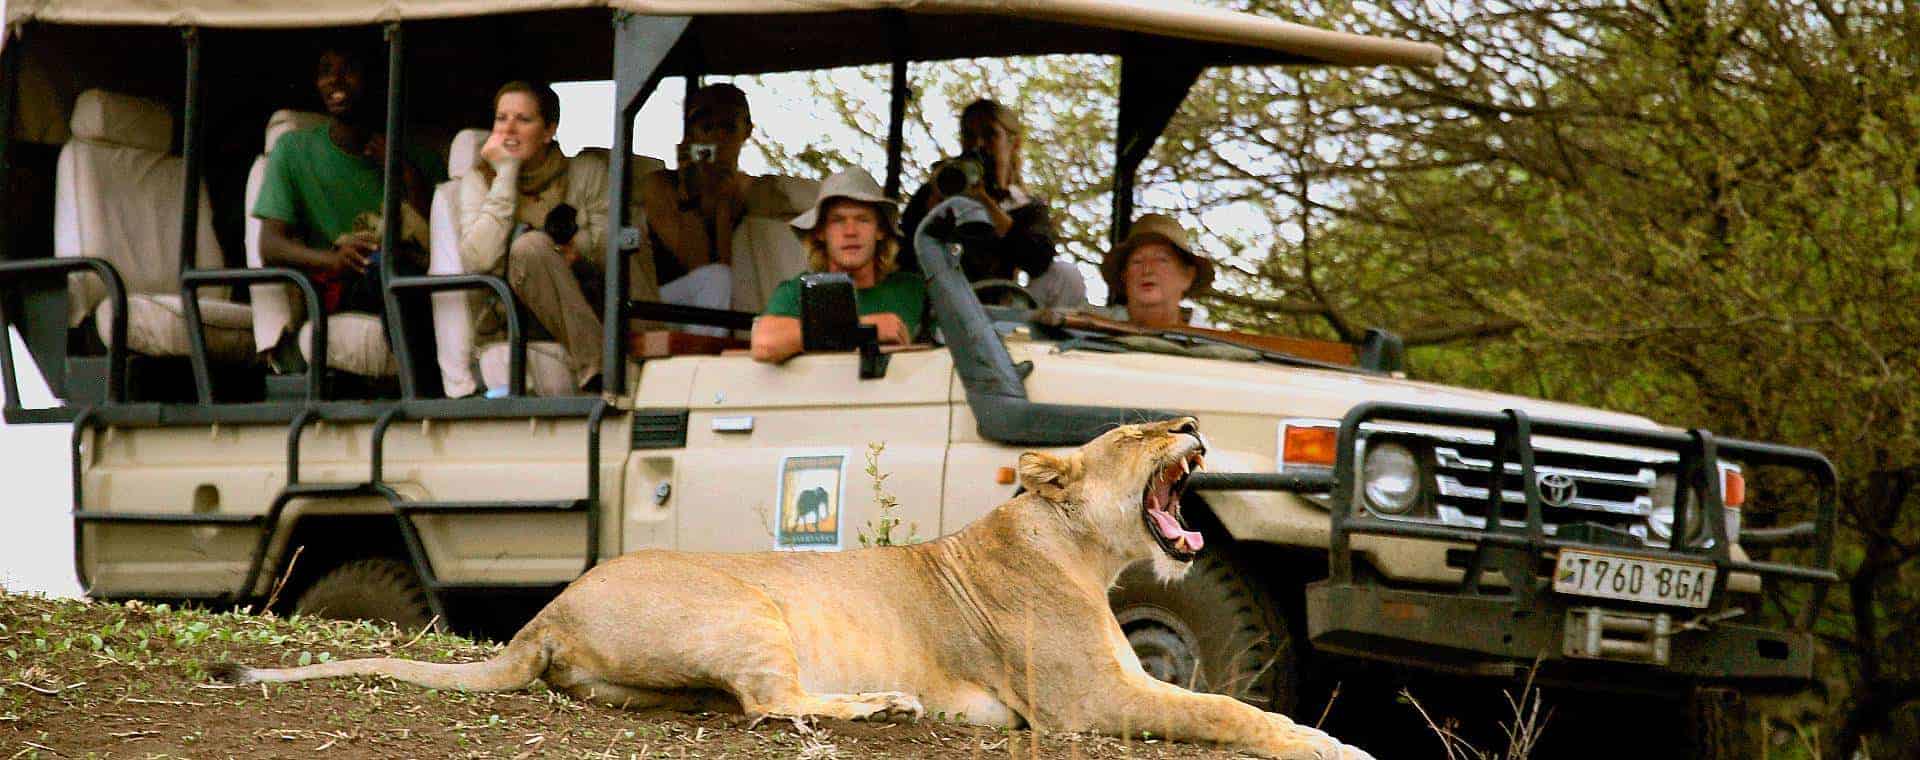 Tanzania Family Safari Experience With AfricanMecca Safaris